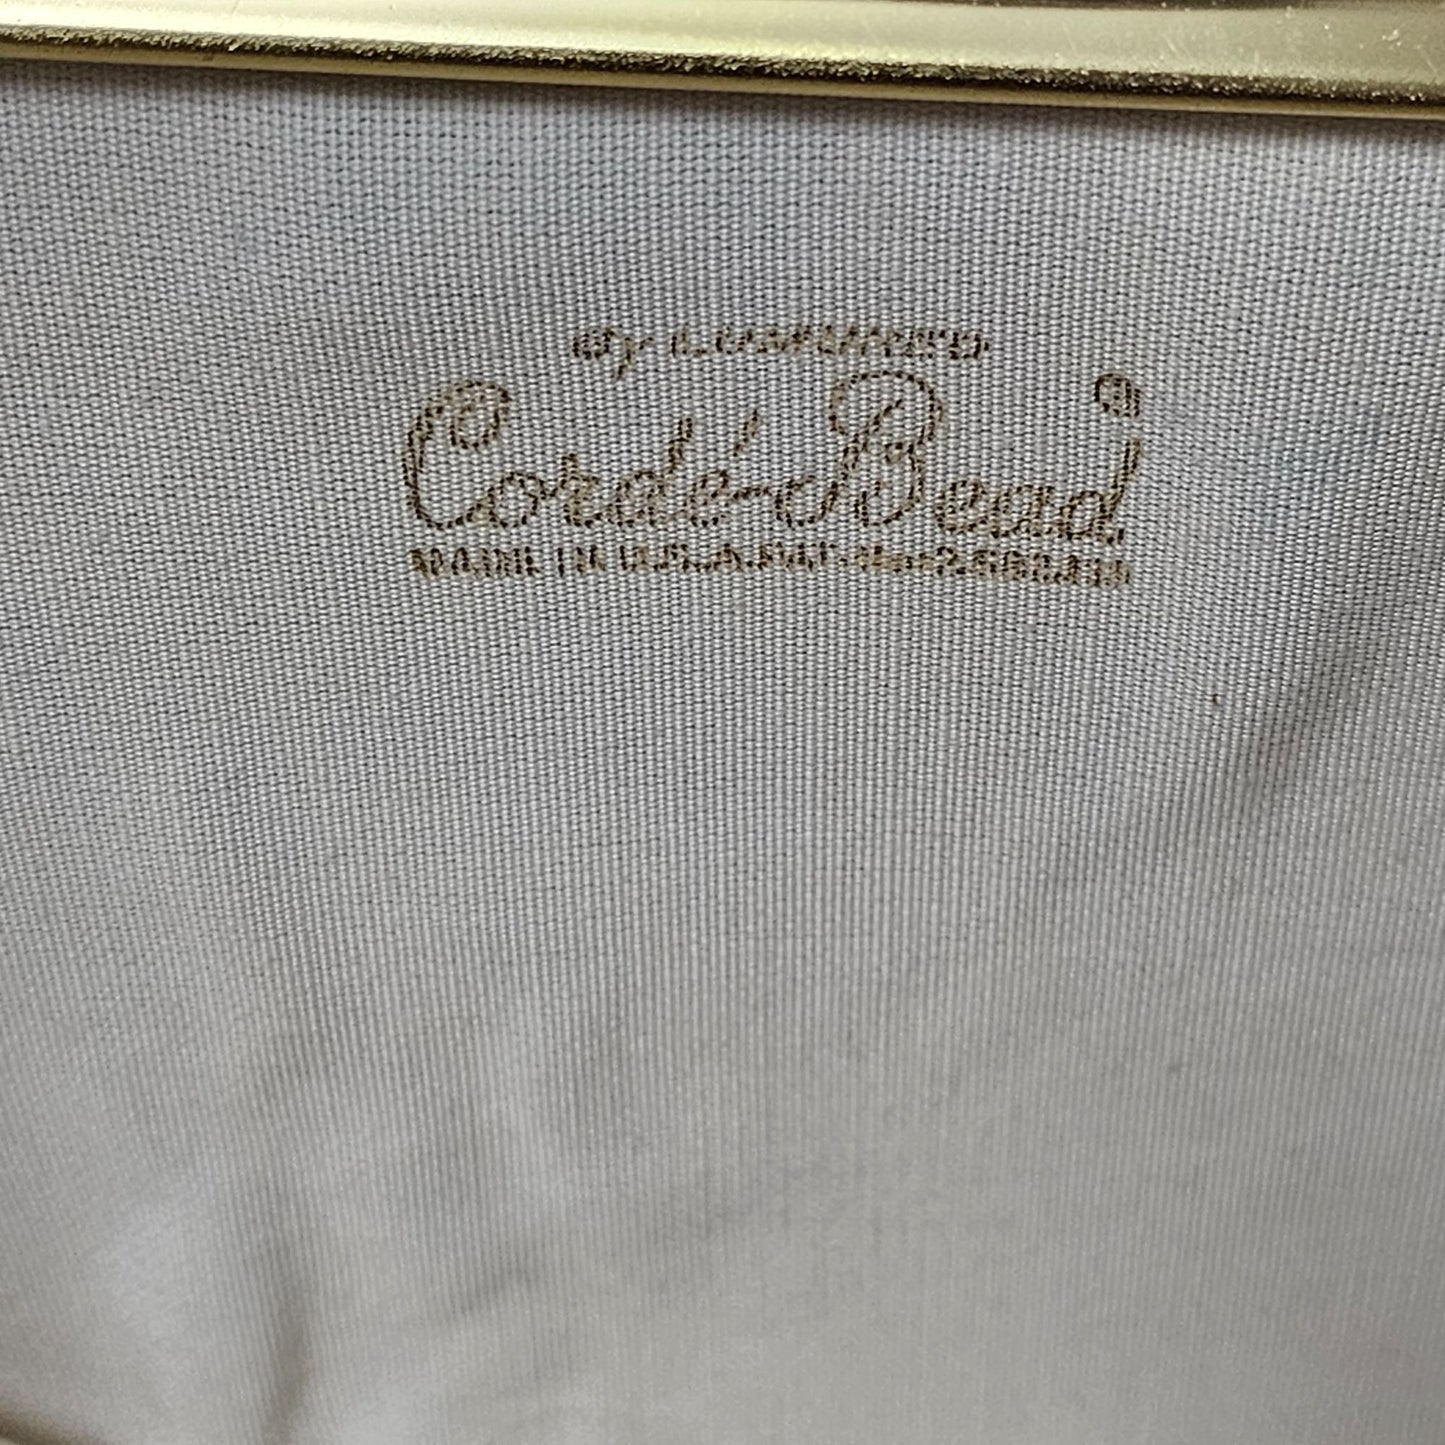 Lumenere Corde Beads Vintage 50s White Beaded Single Handle Kiss Lock Handbag